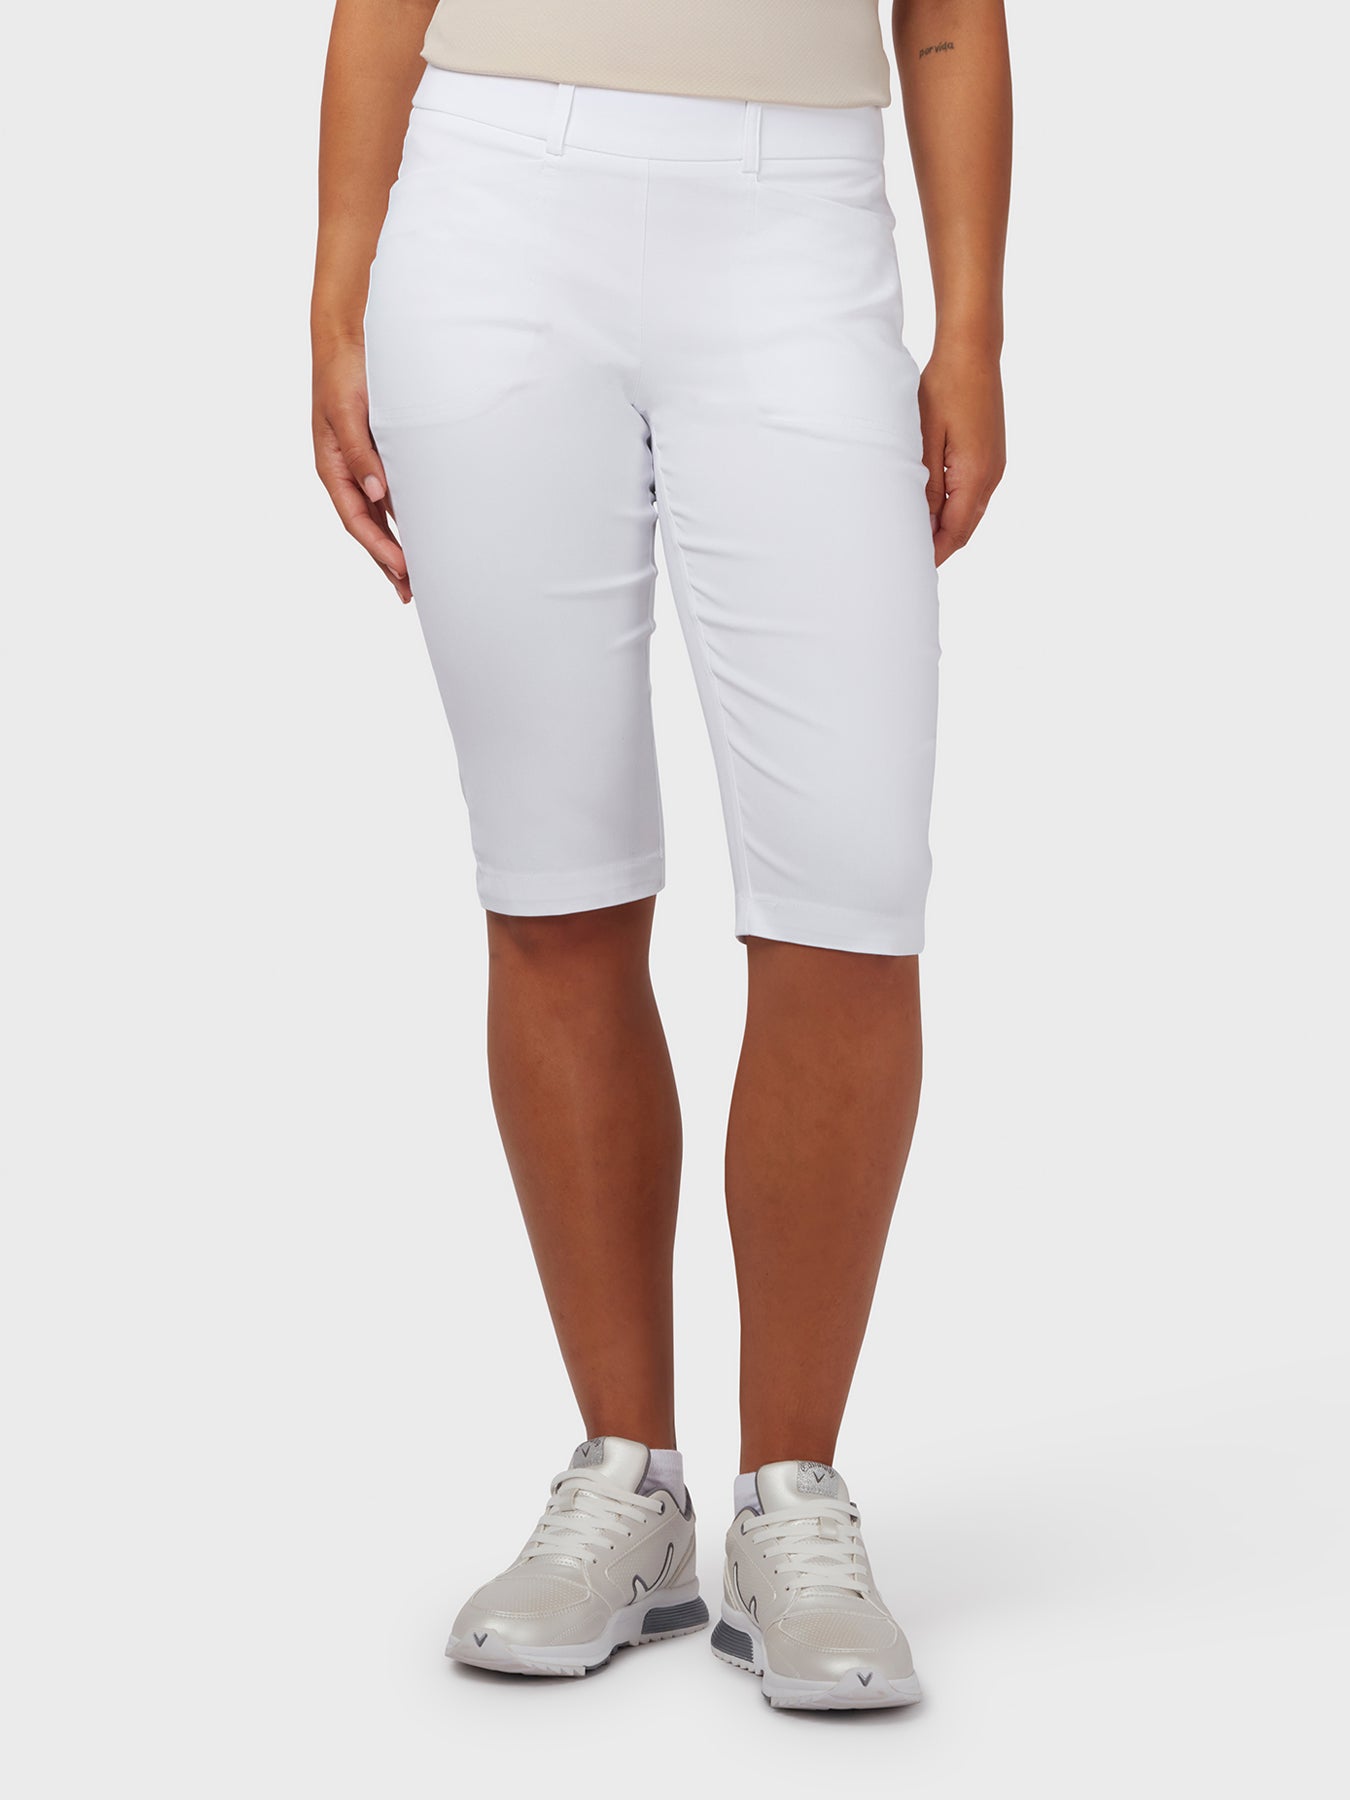 View 34 Truesculpt Womens Shorts In Brilliant White Brilliant White XL information